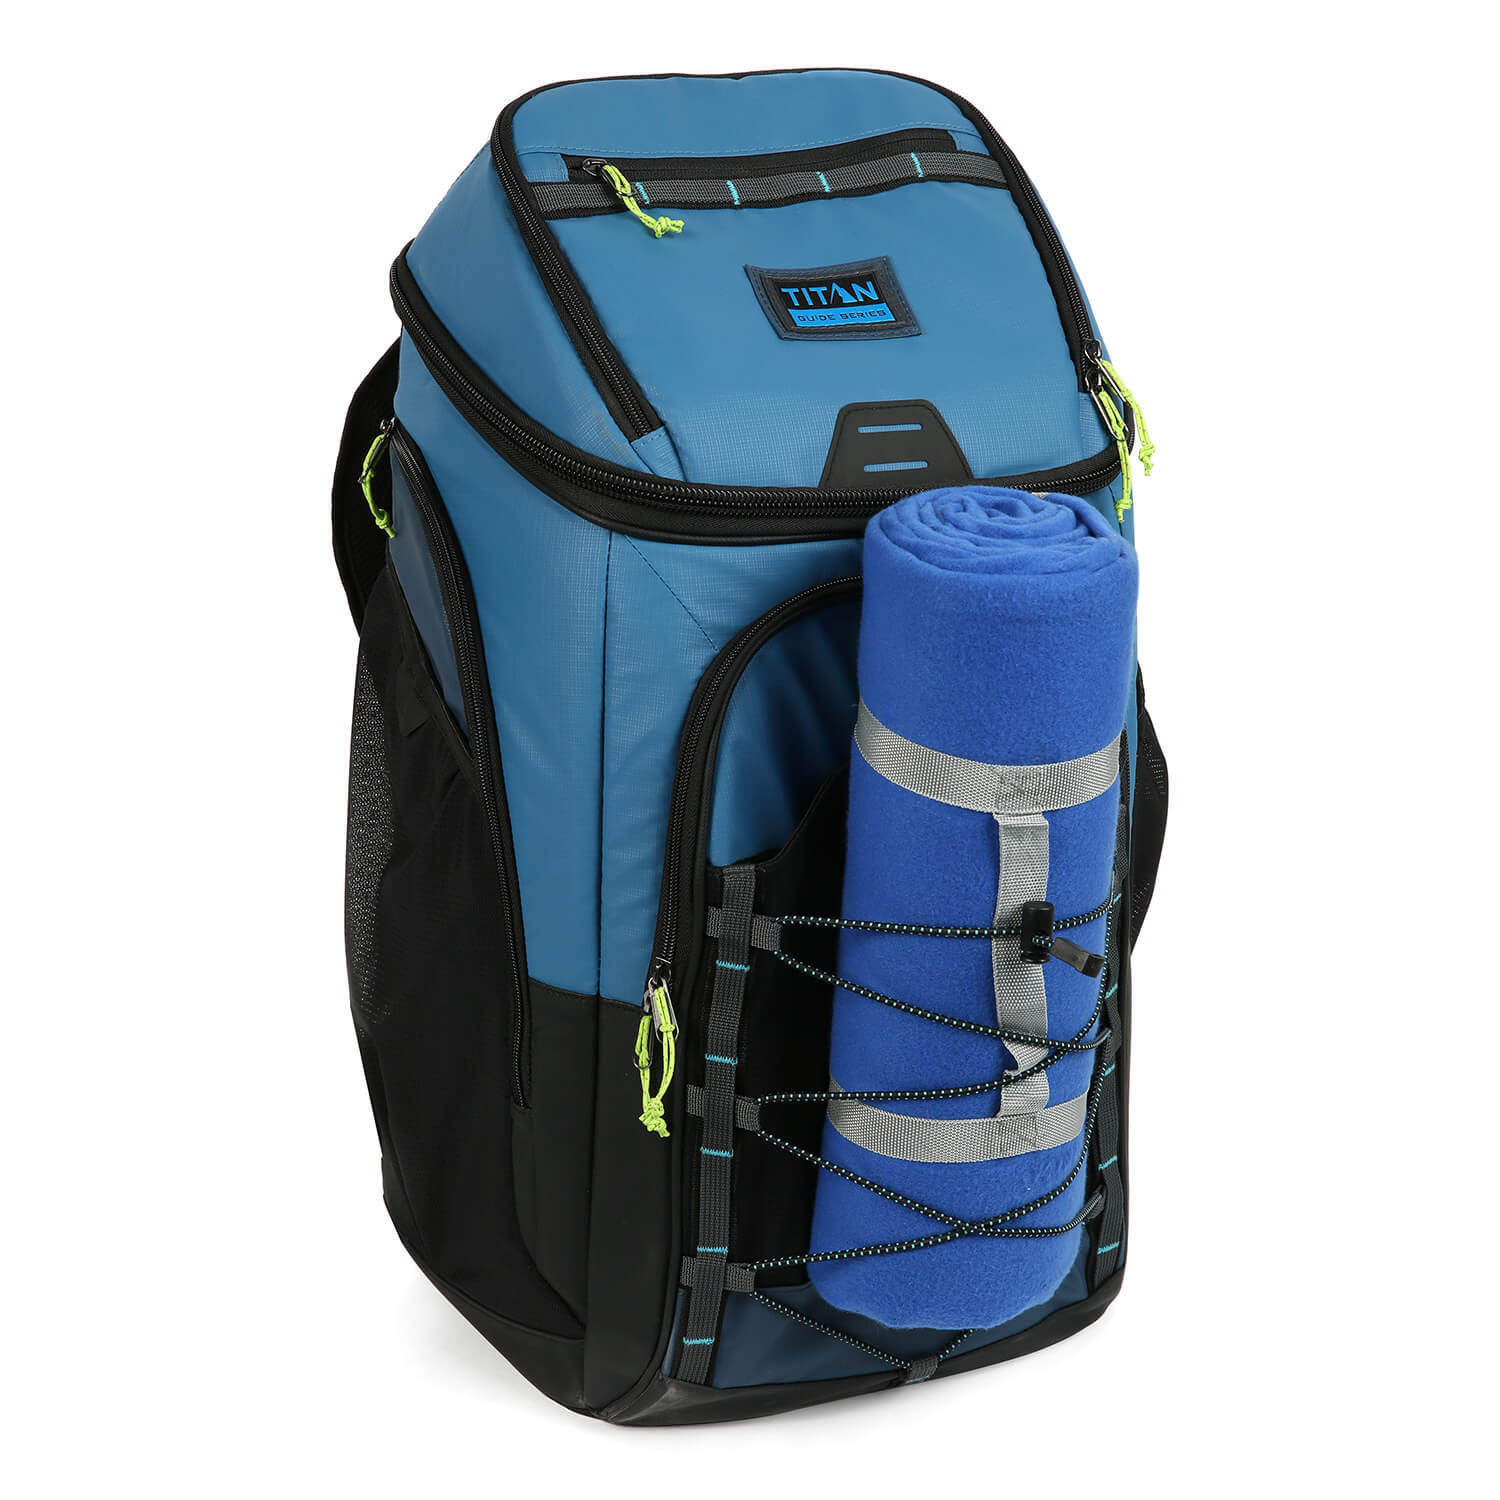 Arctic Zone - Titan Guide Series Premium Backpack Cooler - 30 Can